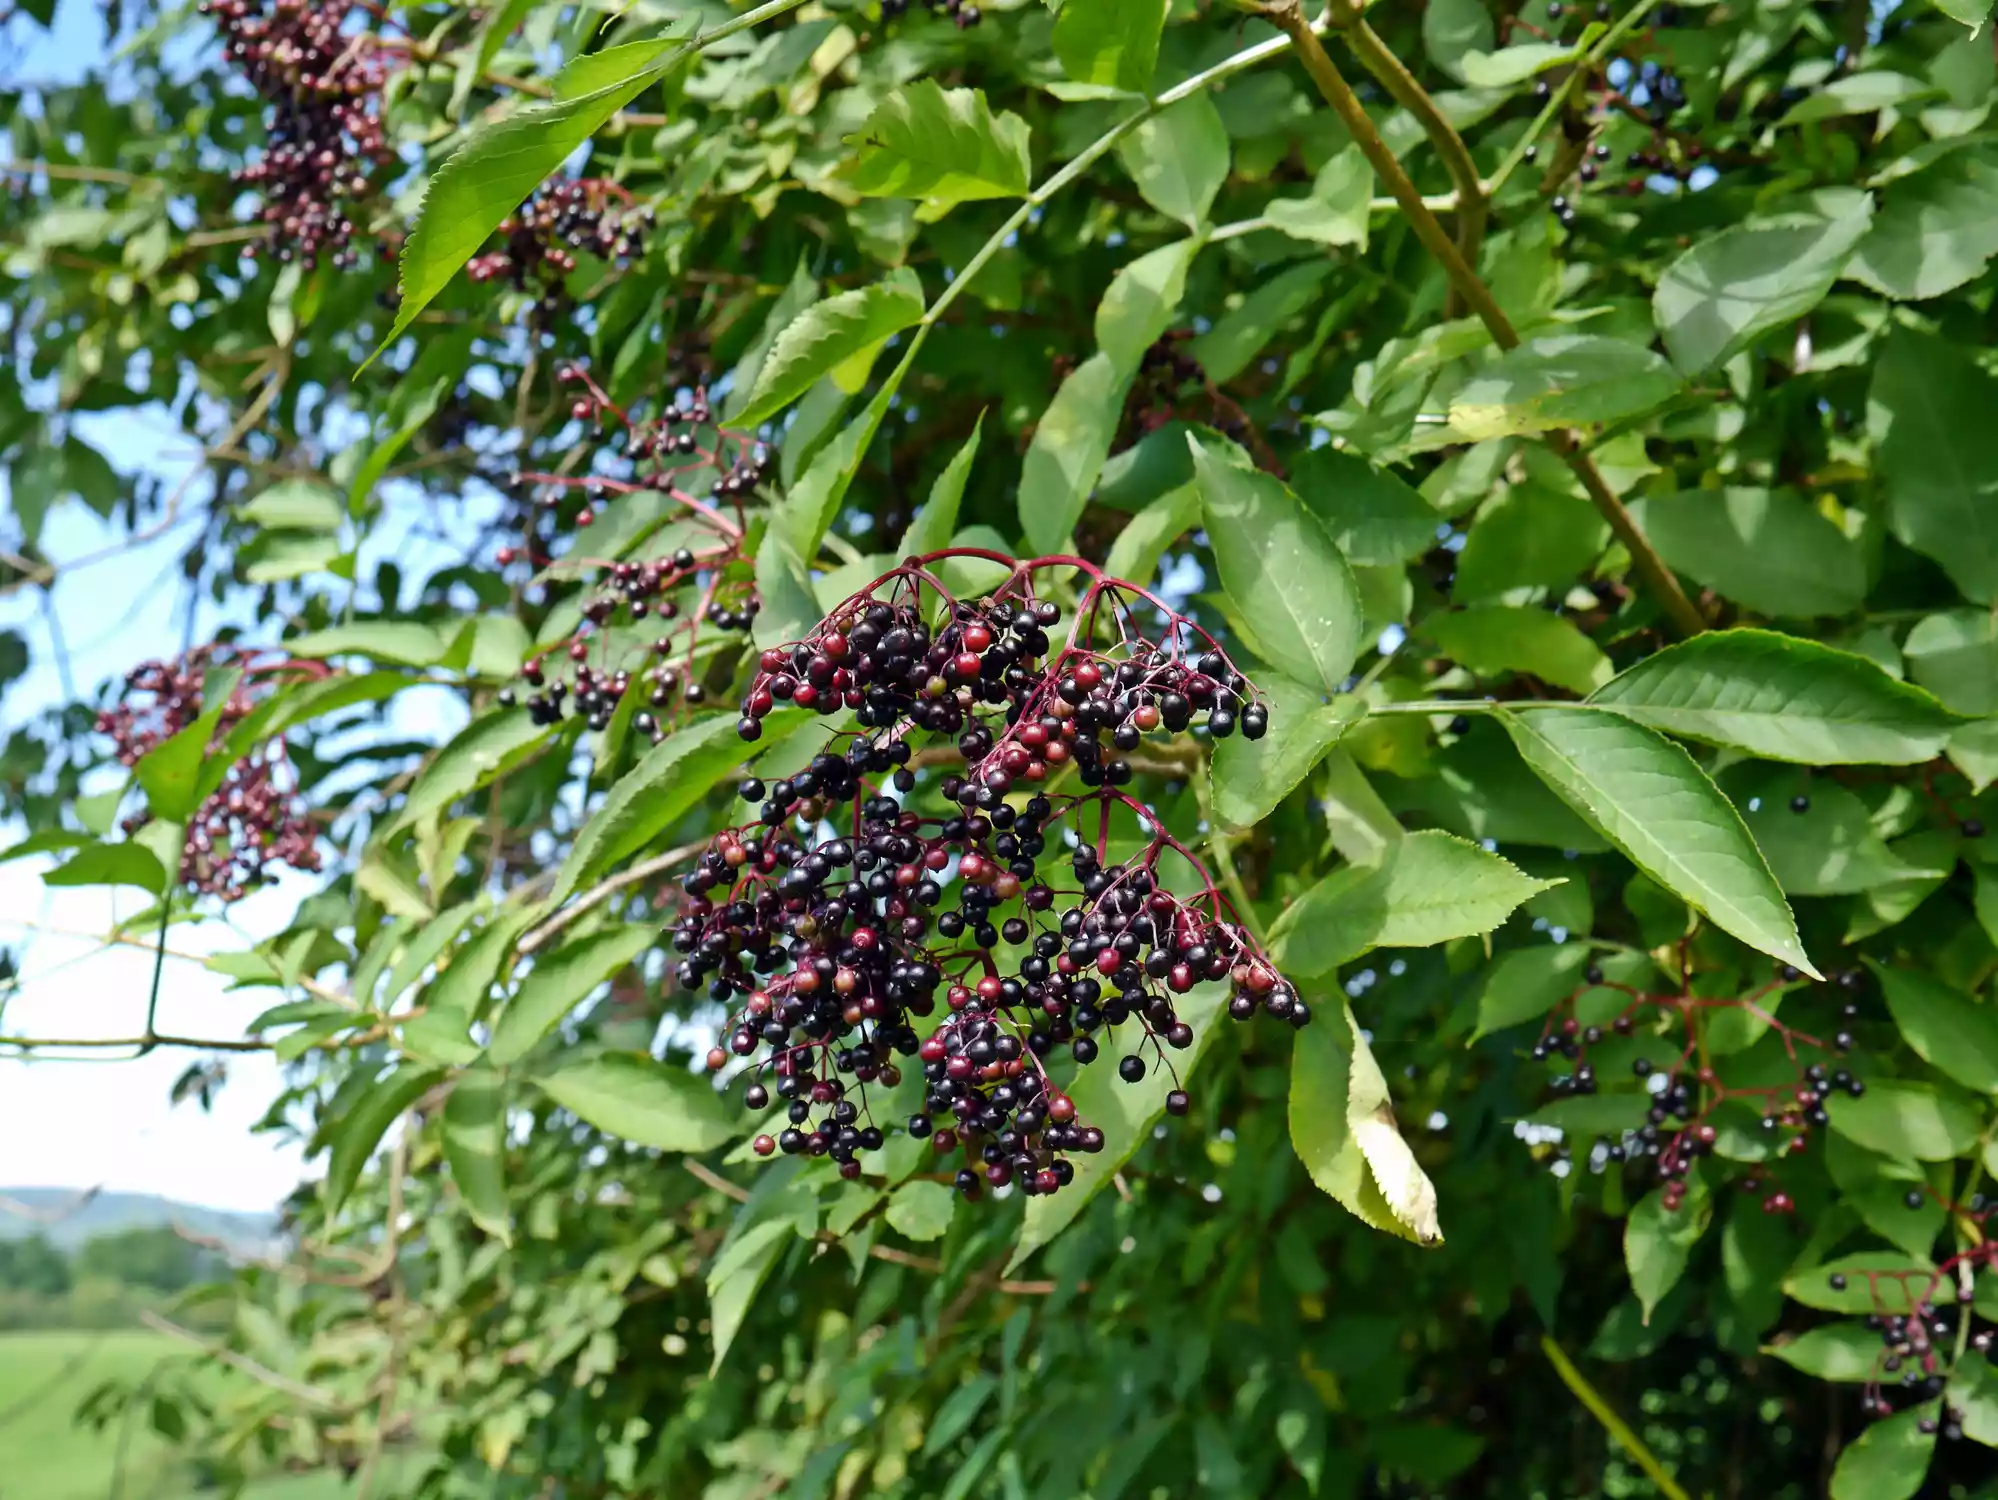 elderberry plant with green leaves and dark purple berries